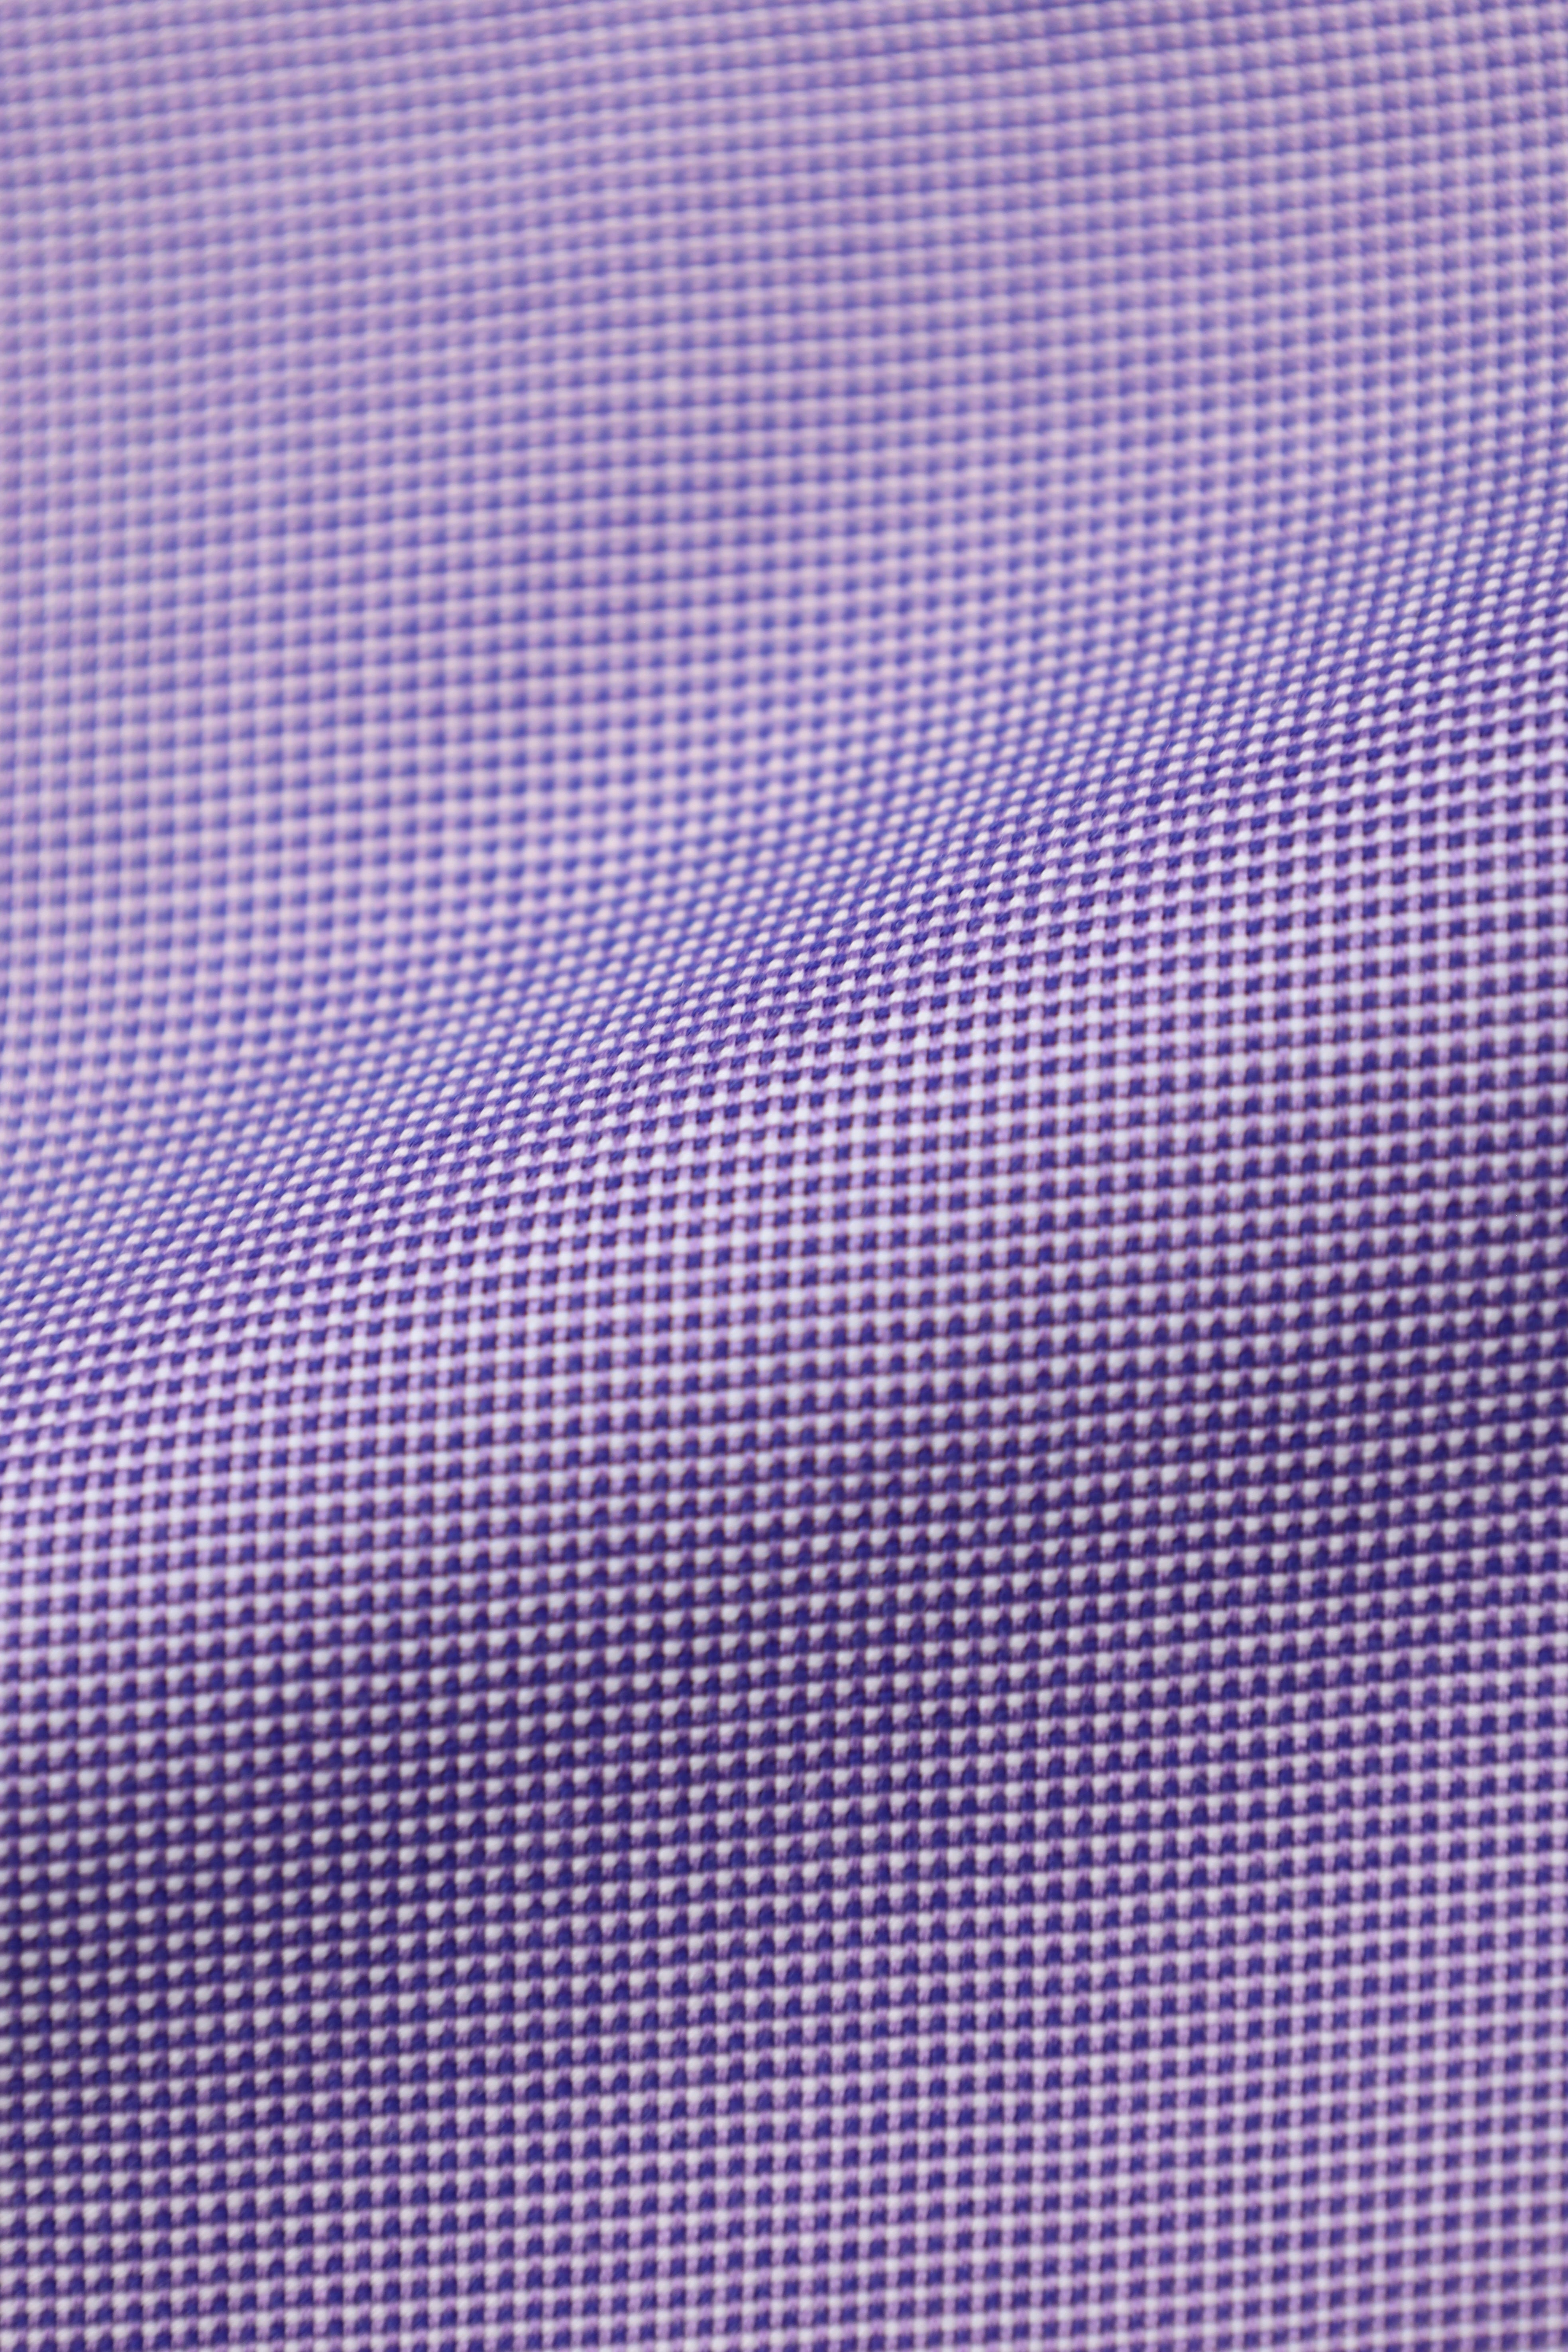 Tom Ford Lilac Micro-Pattern Shirt